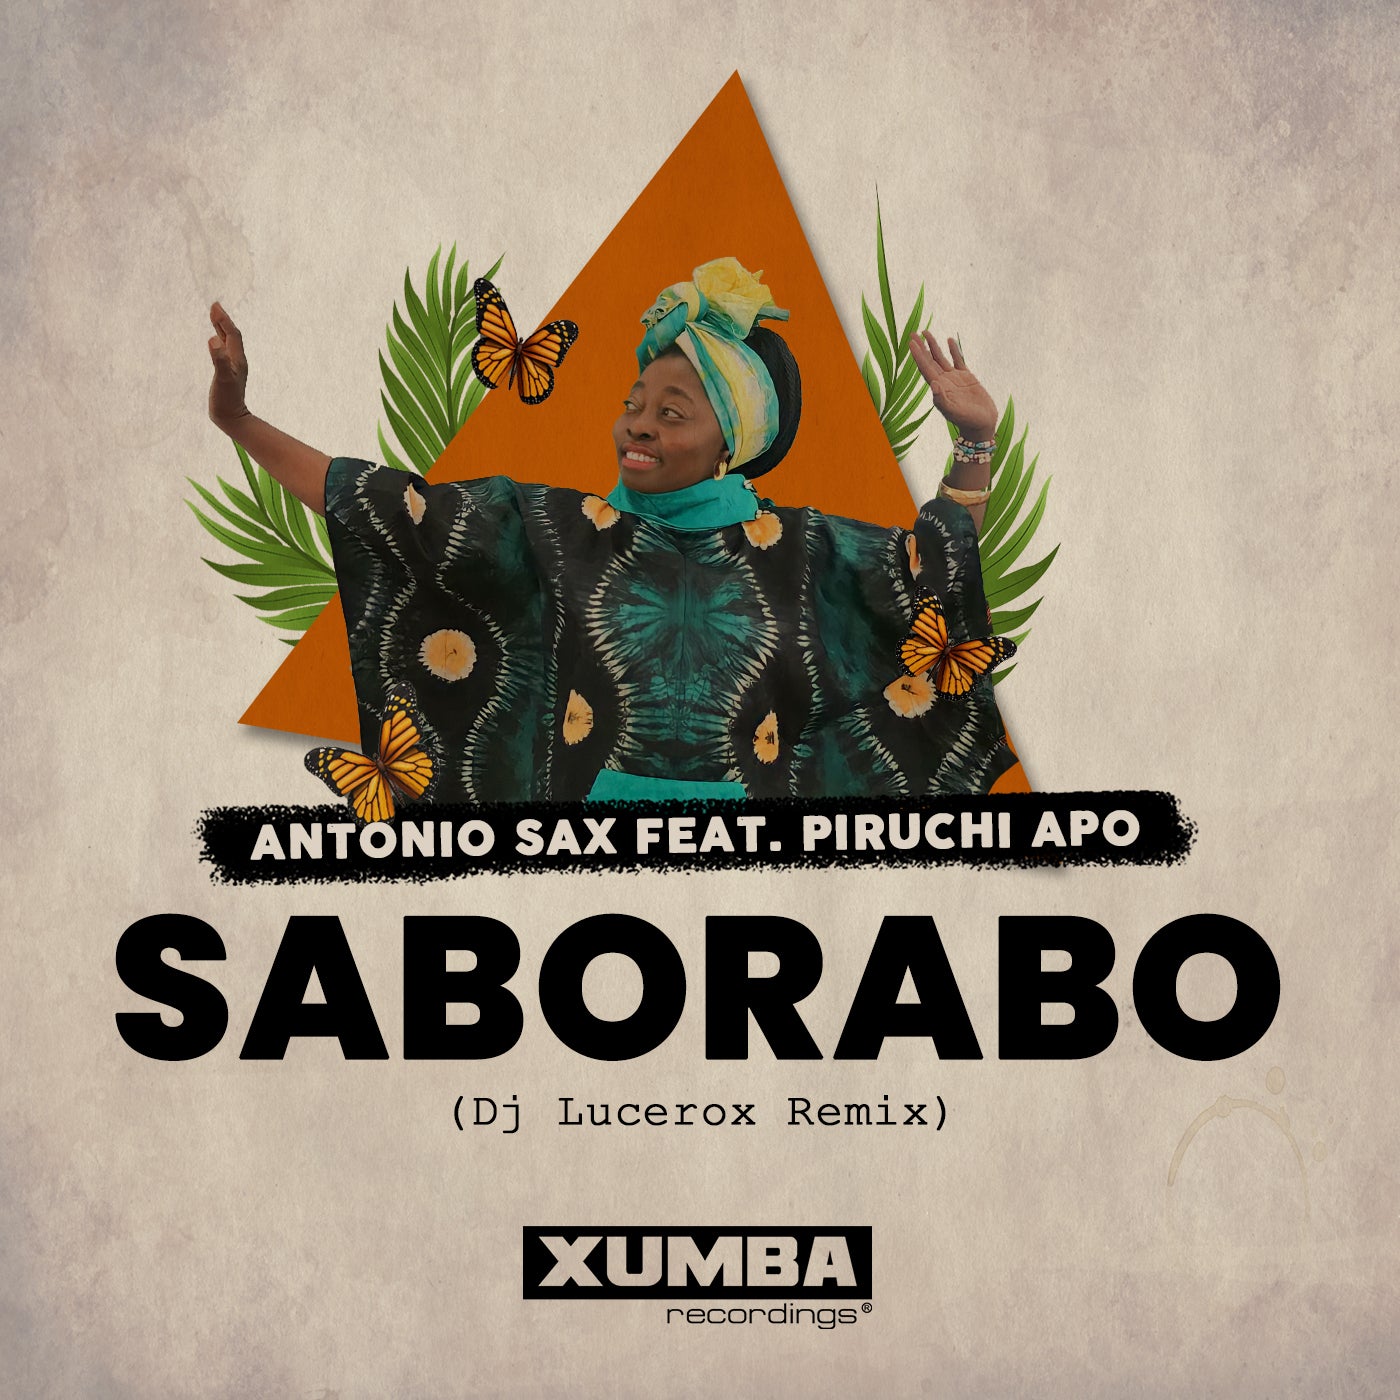 Saborabo (Dj Lucerox Remix)